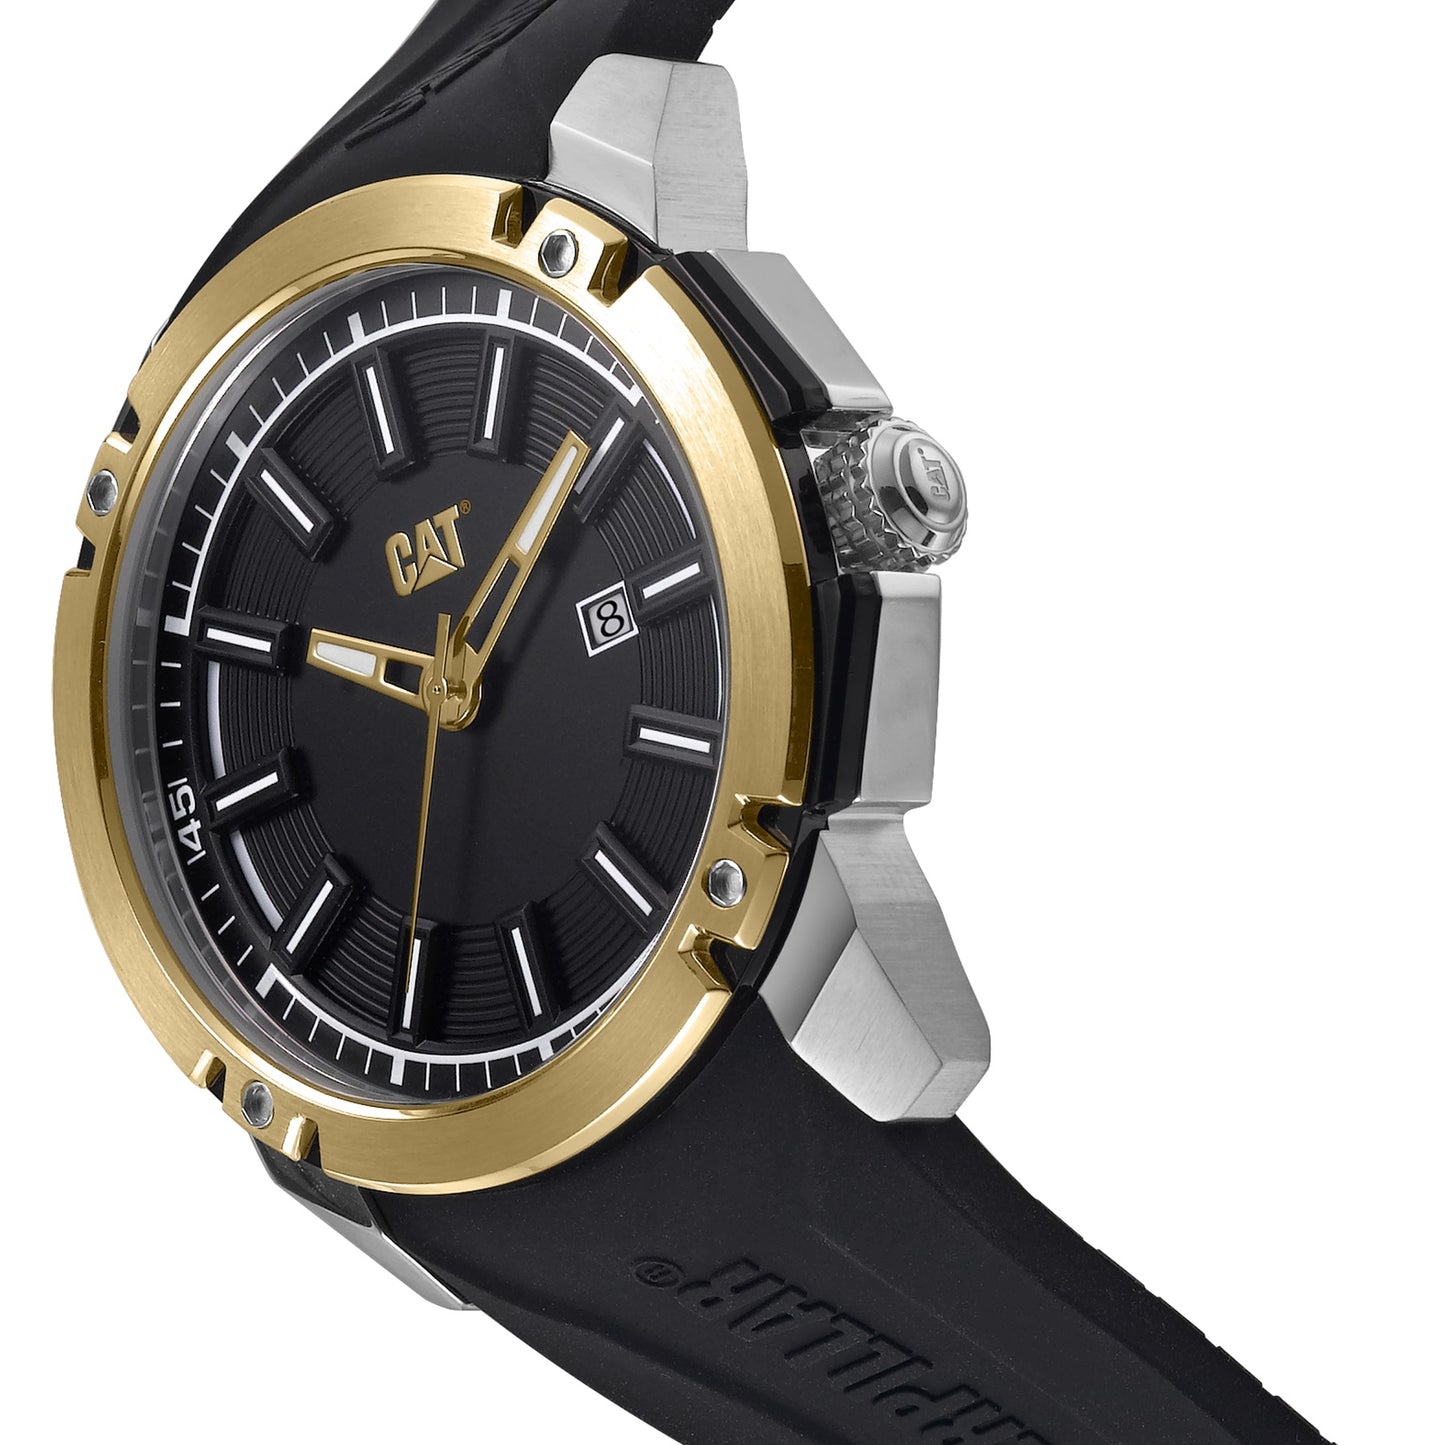 CAT - Elite 3HD Watch Black/Gold